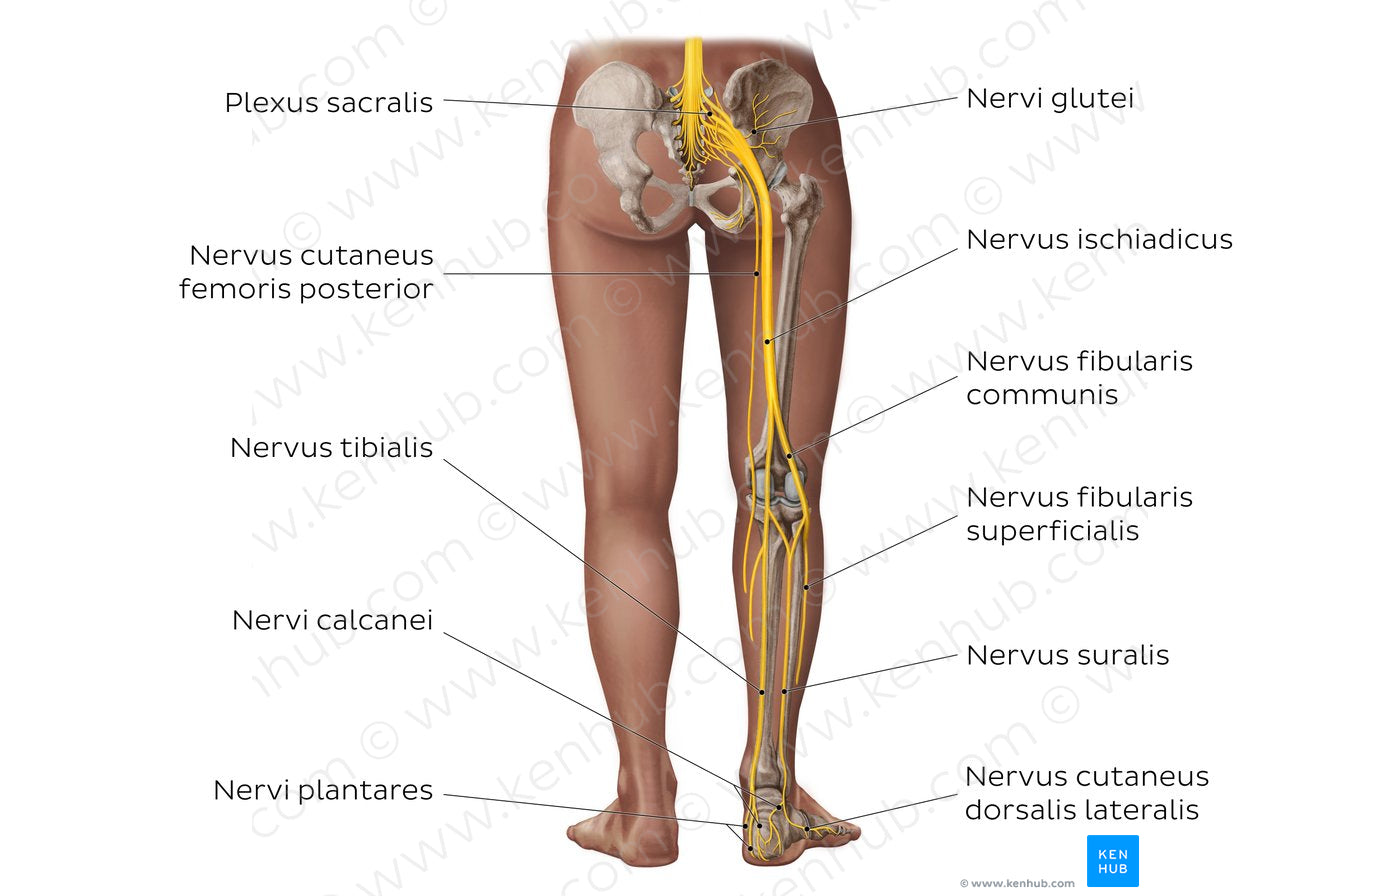 Main nerves of the lower limb - posterior (Latin)